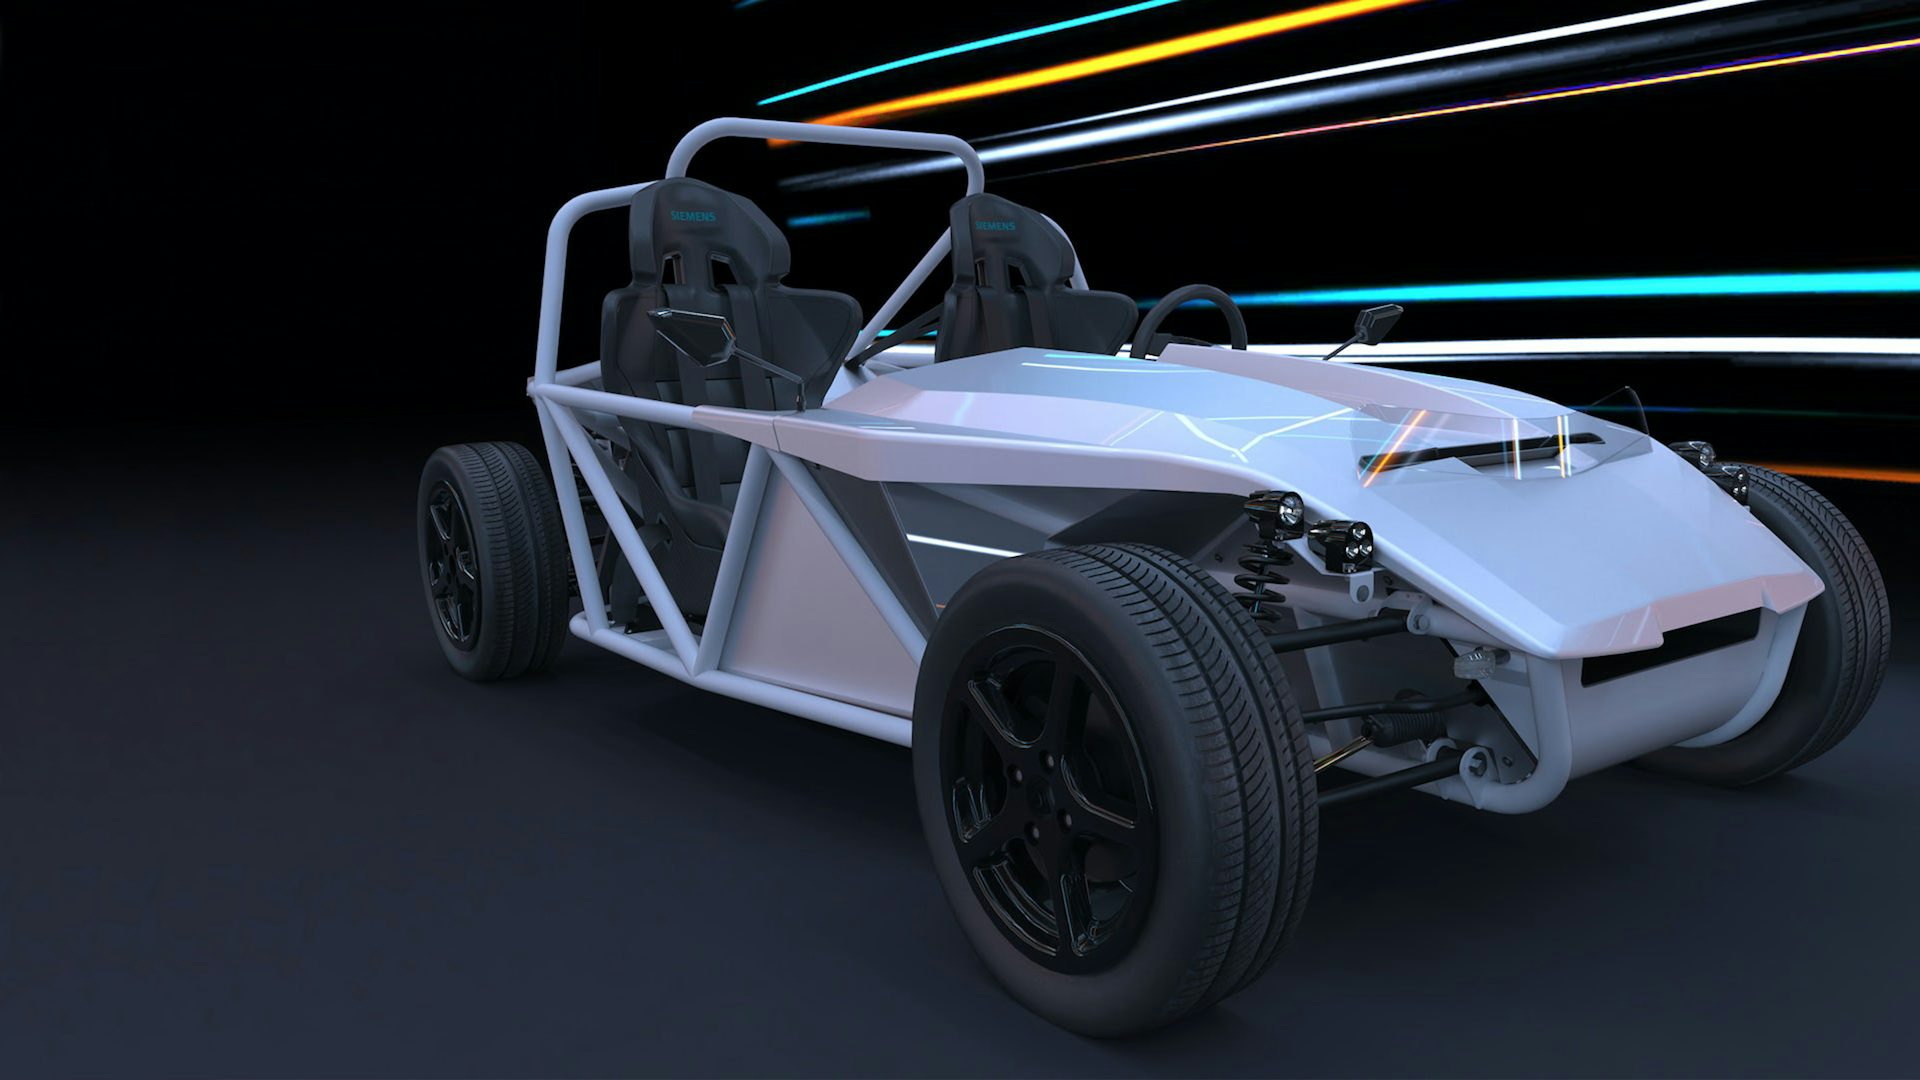 3D mock-up of an open top buggy design